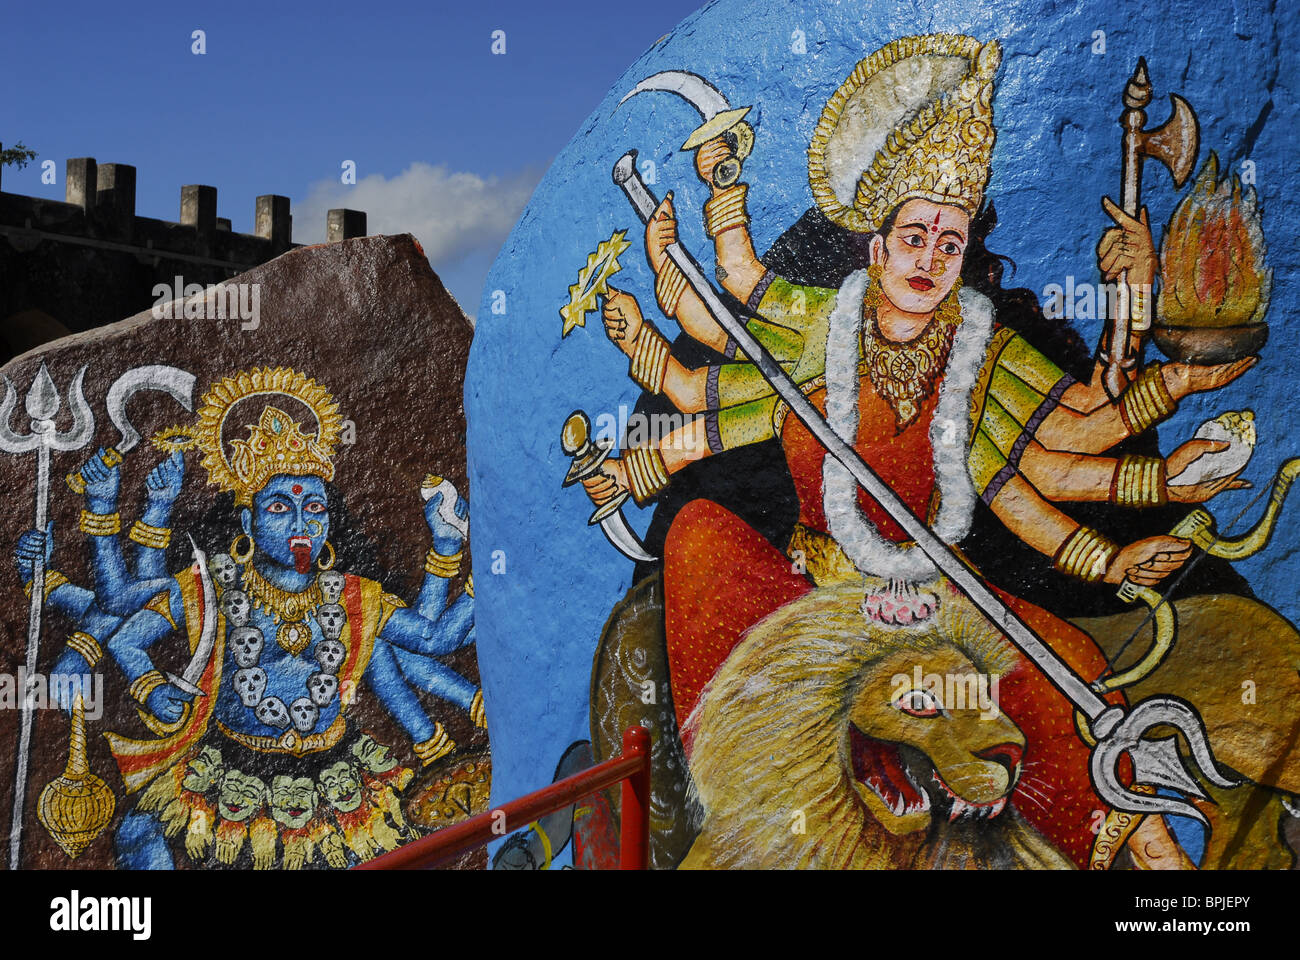 Kali and Shiva painted on rock boulders, Golconda Fort, Hyderabad, Andhra Pradesh, India, Asia Stock Photo